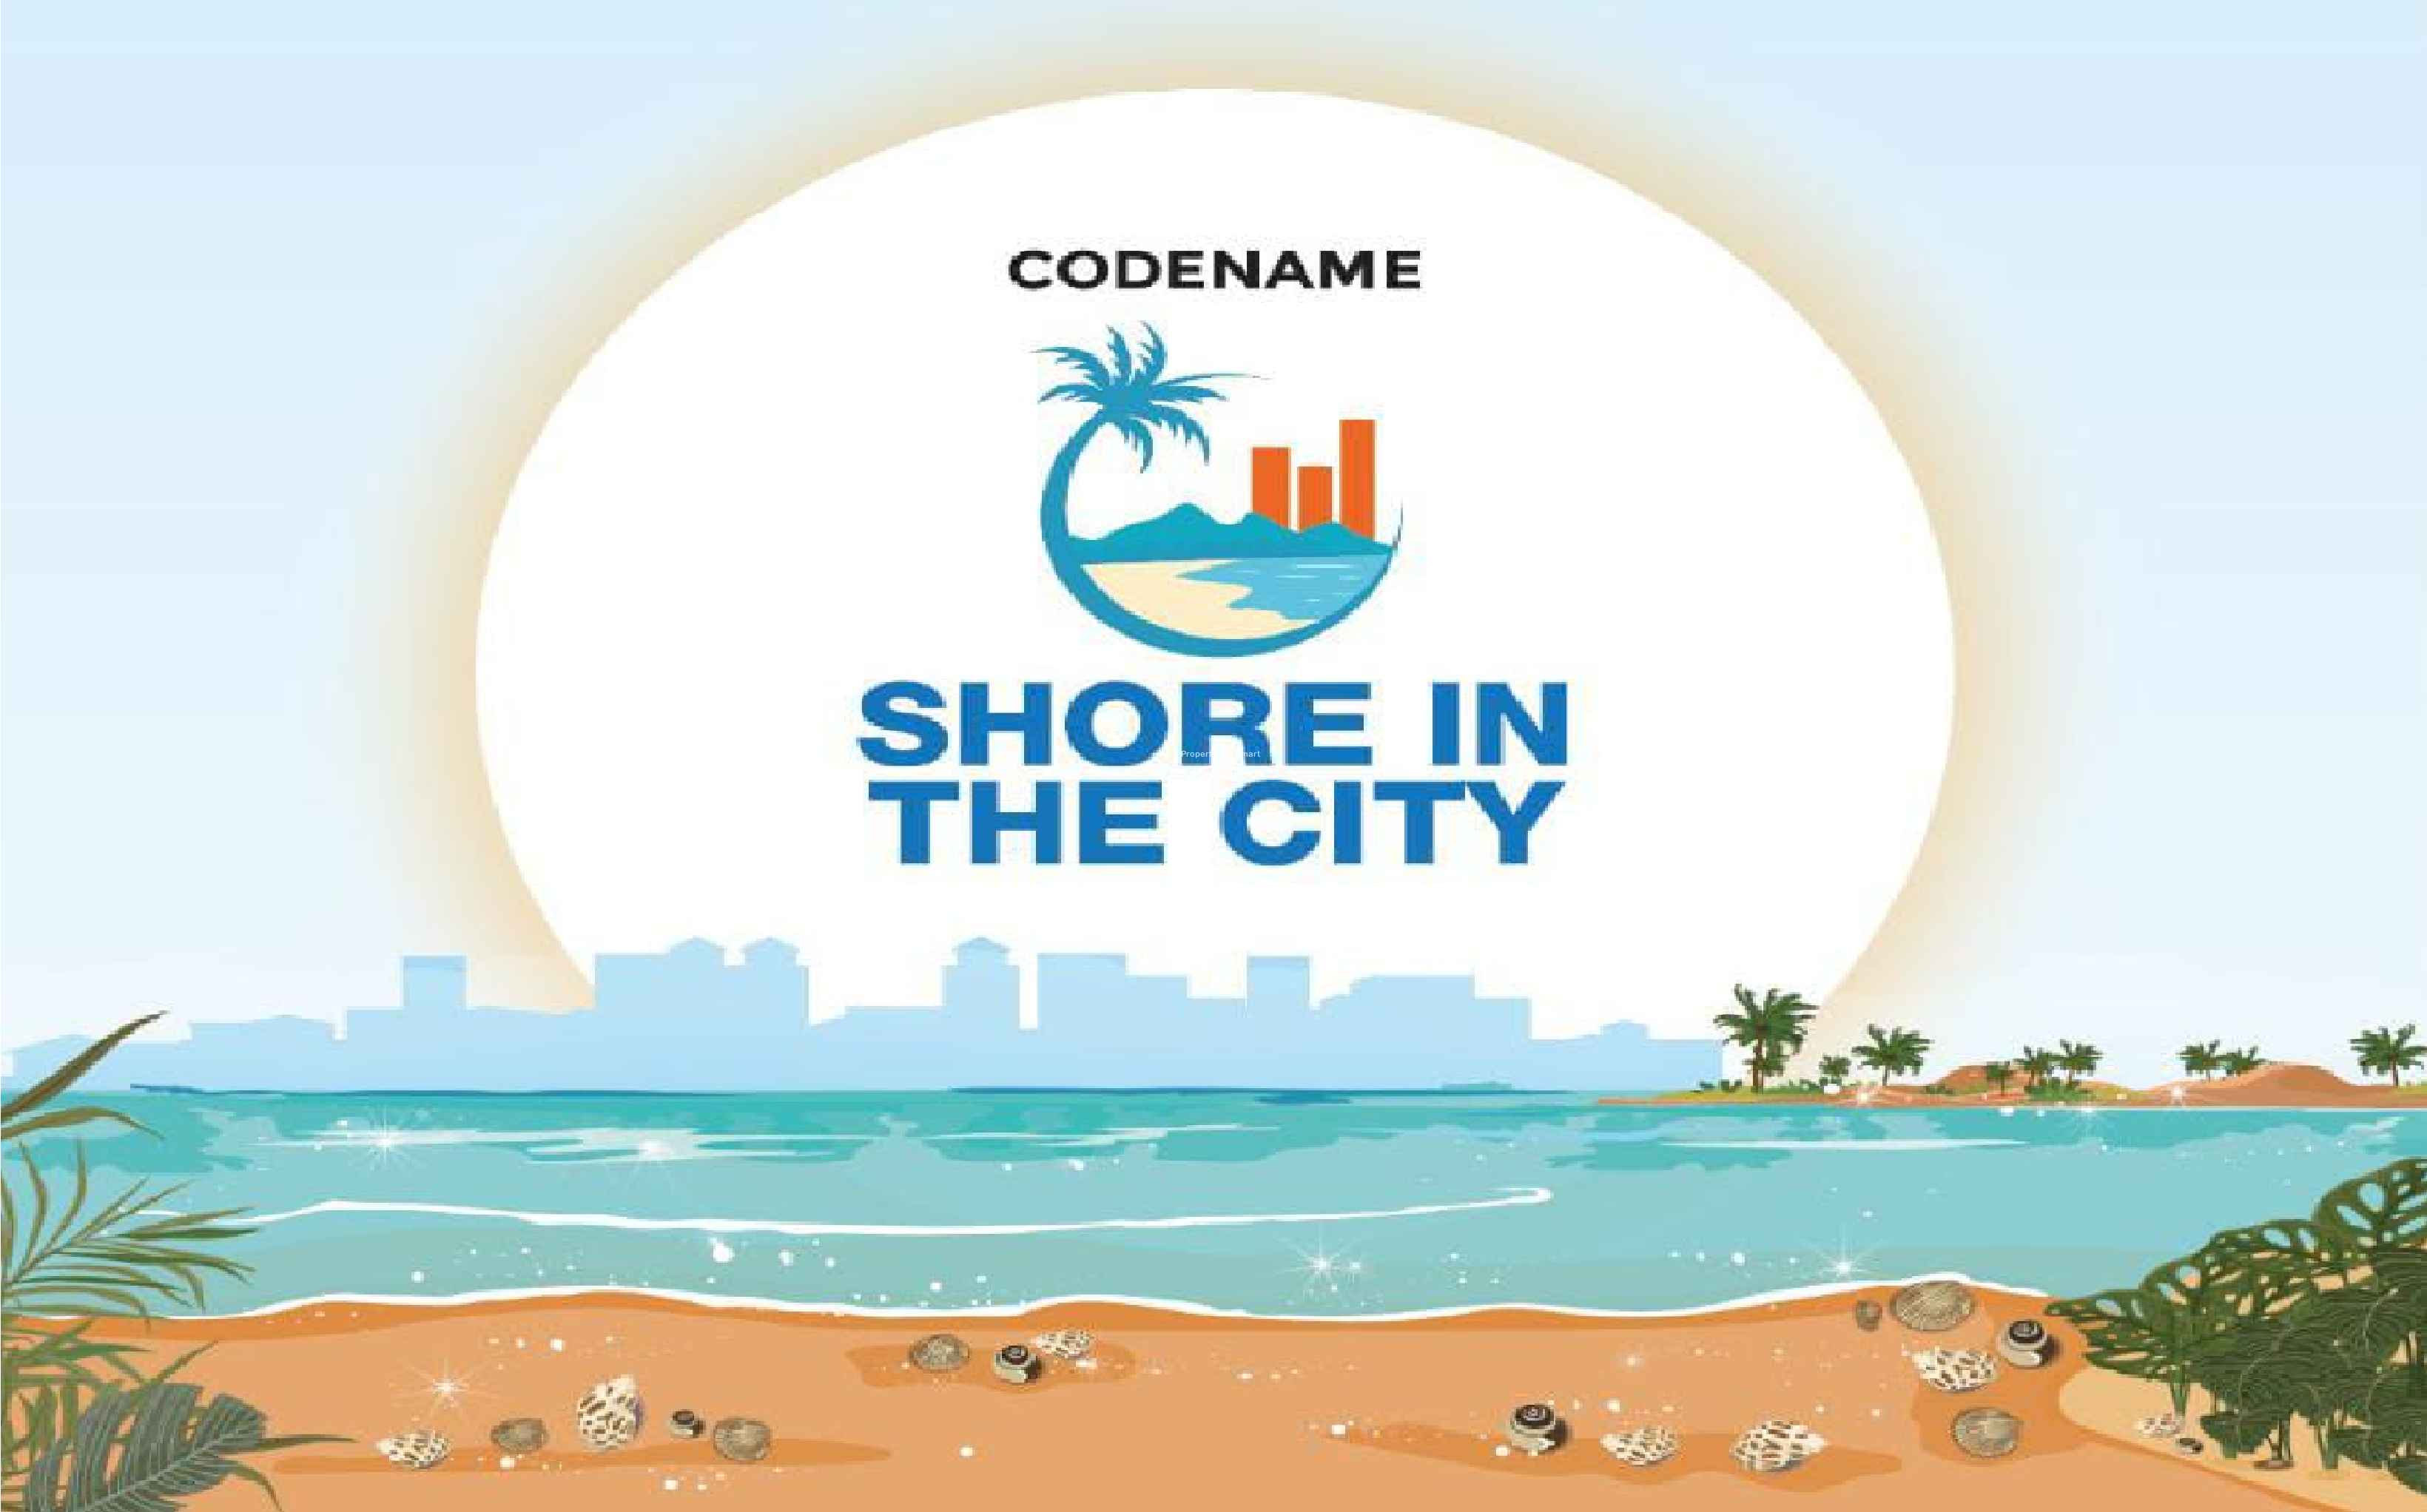 Codename Shore In The City Kalyan image